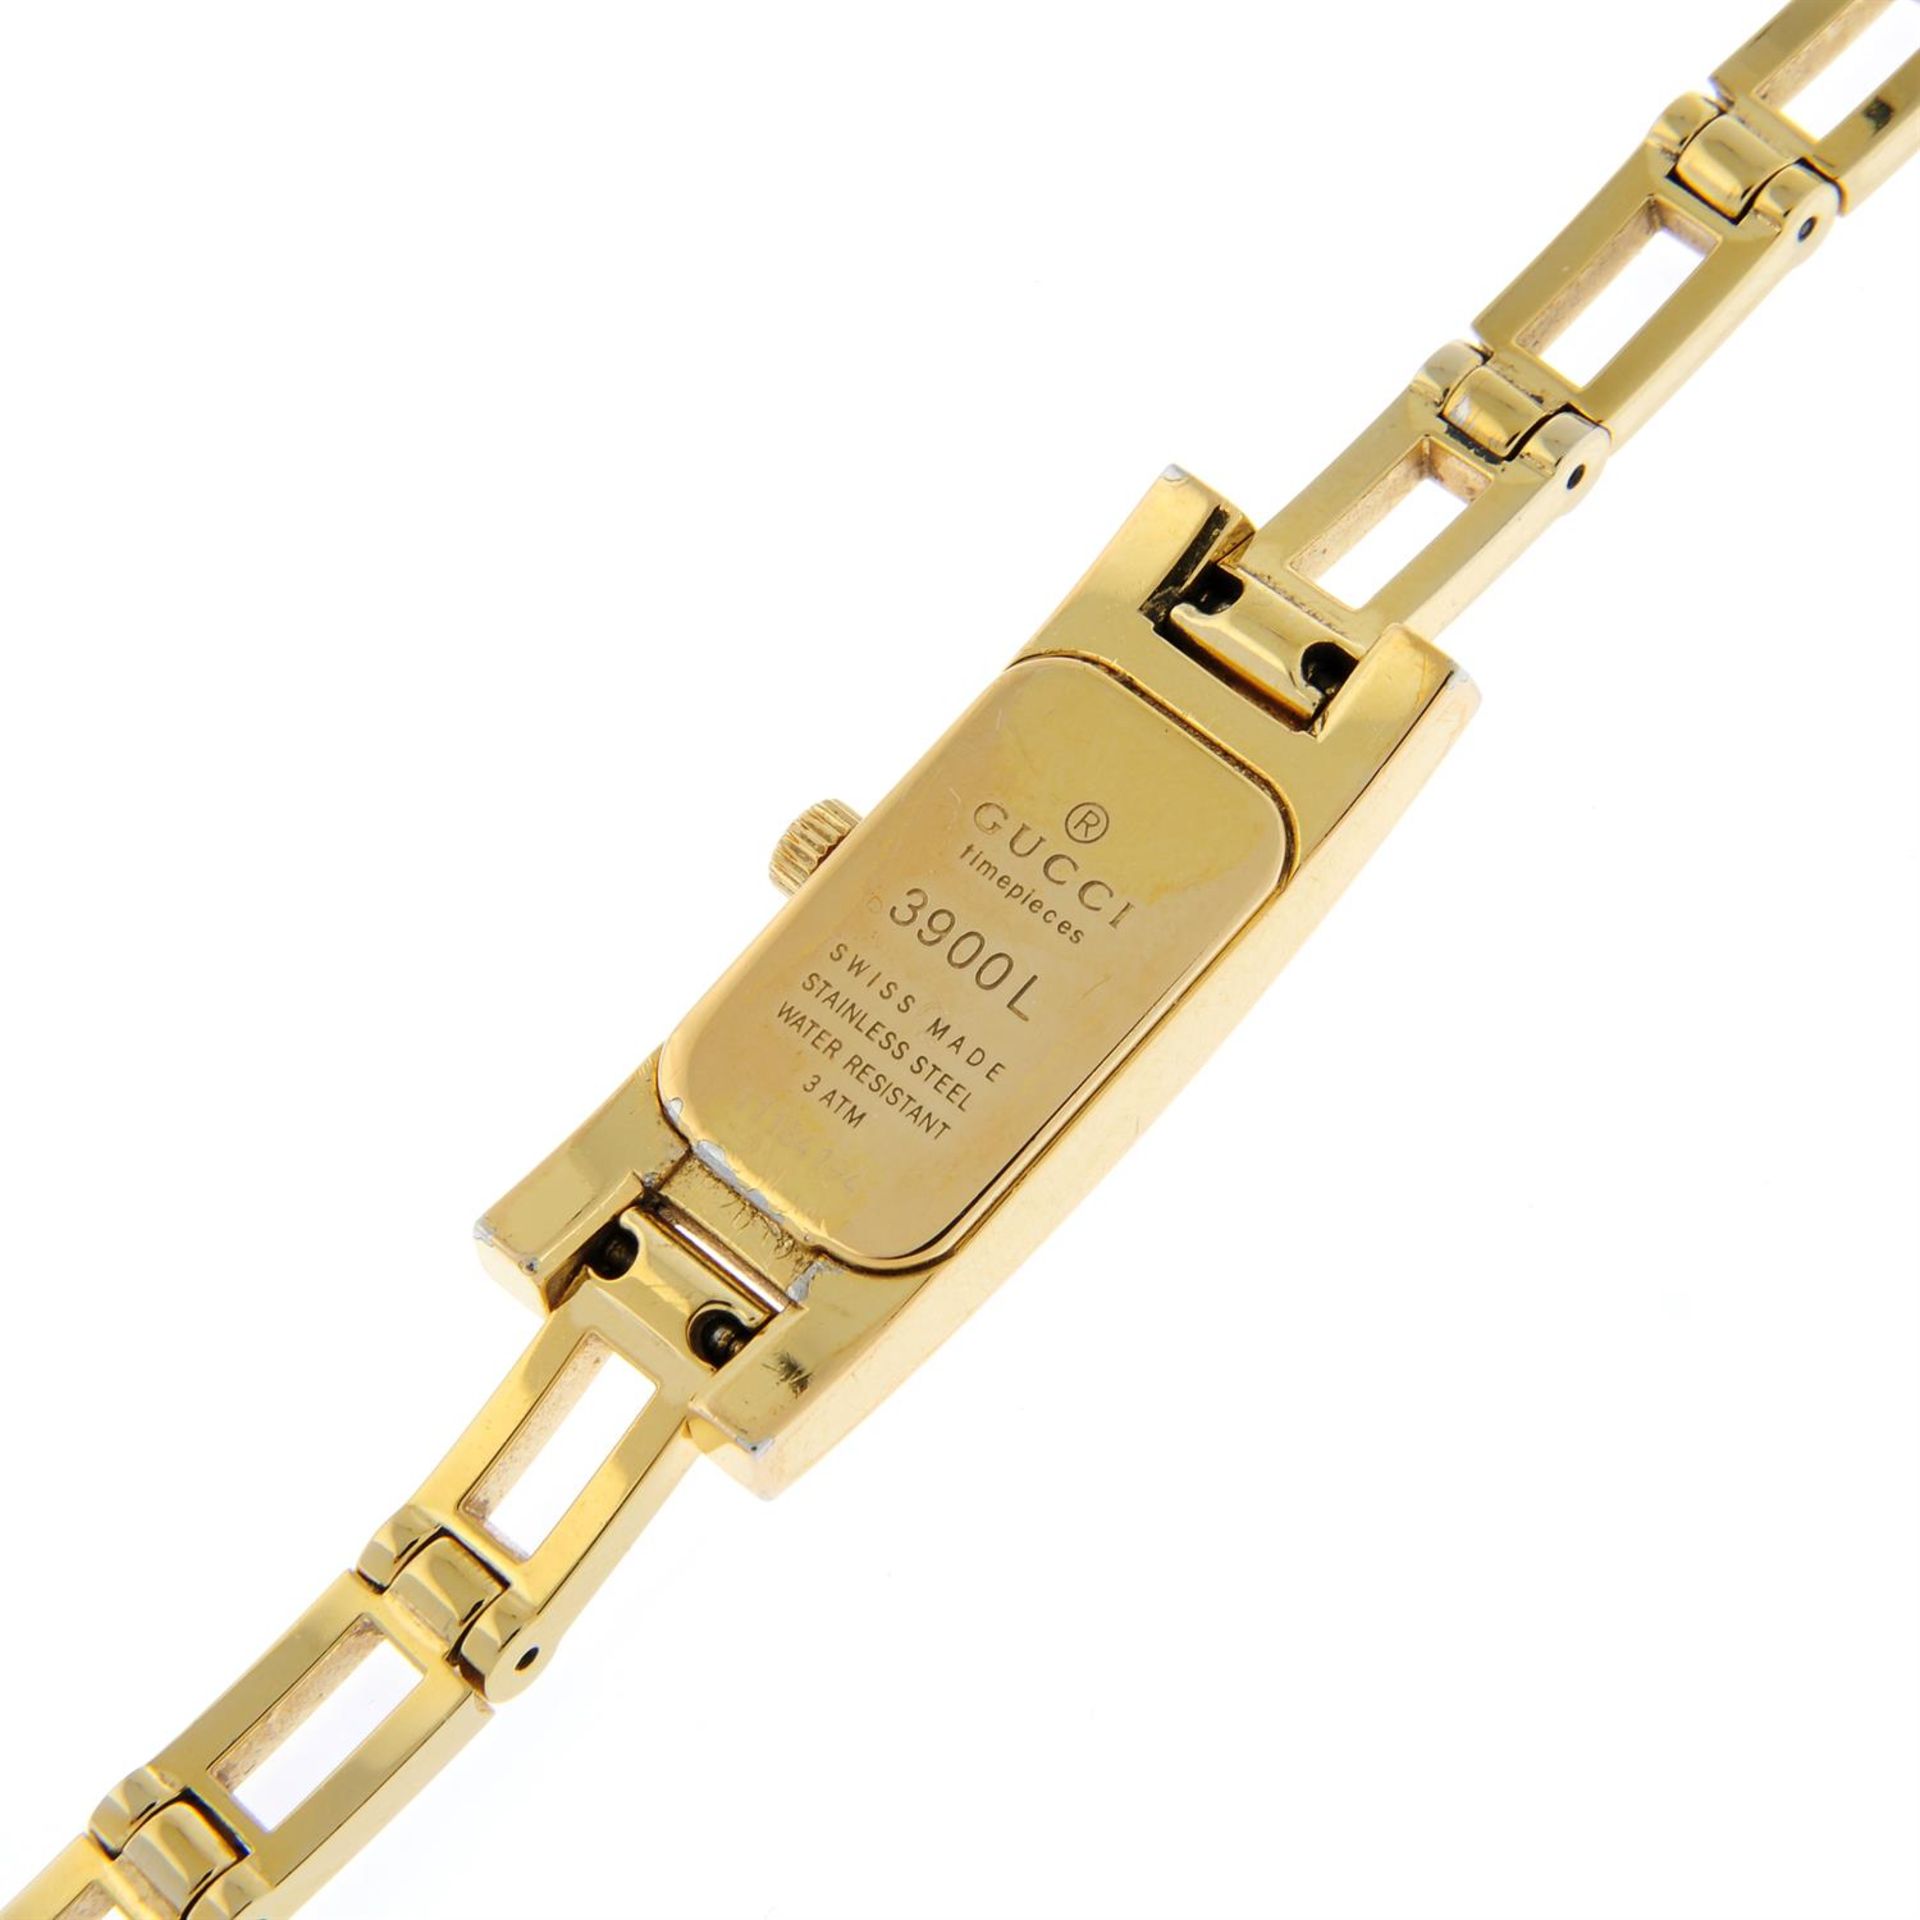 GUCCI - a 3900L bracelet watch. - Bild 4 aus 4